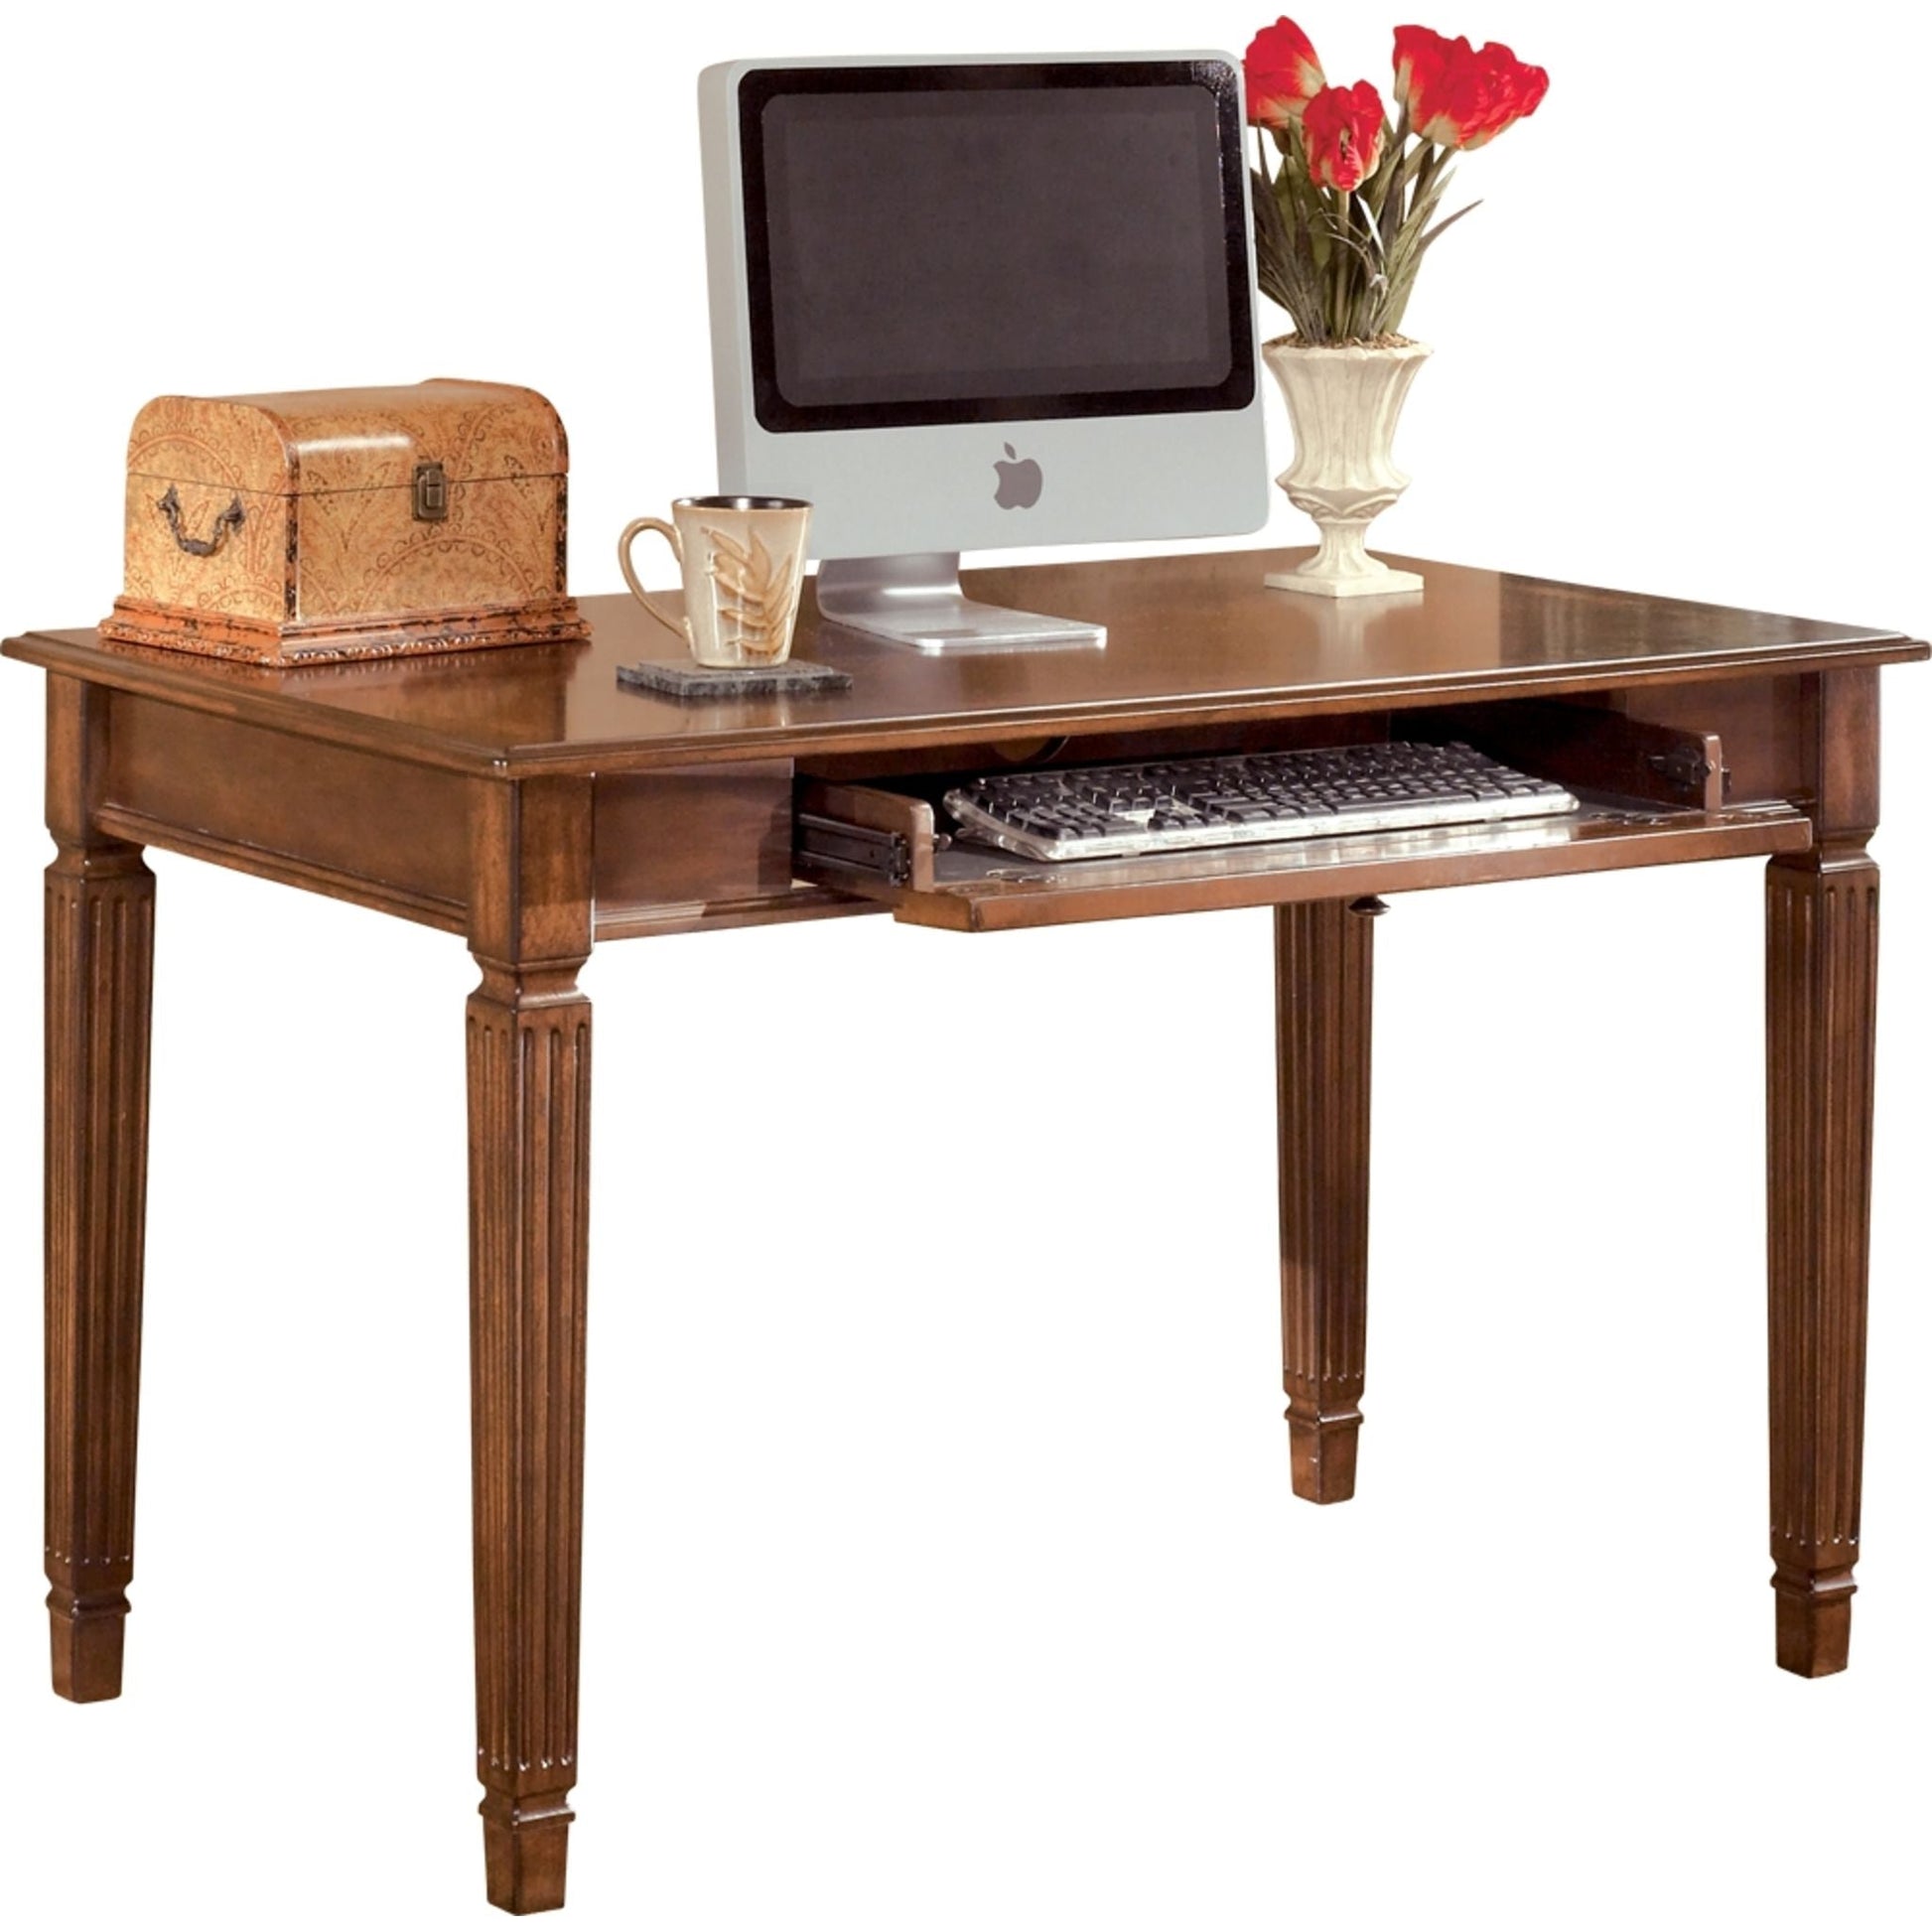 Hamlyn Small Leg Desk - Medium Brown